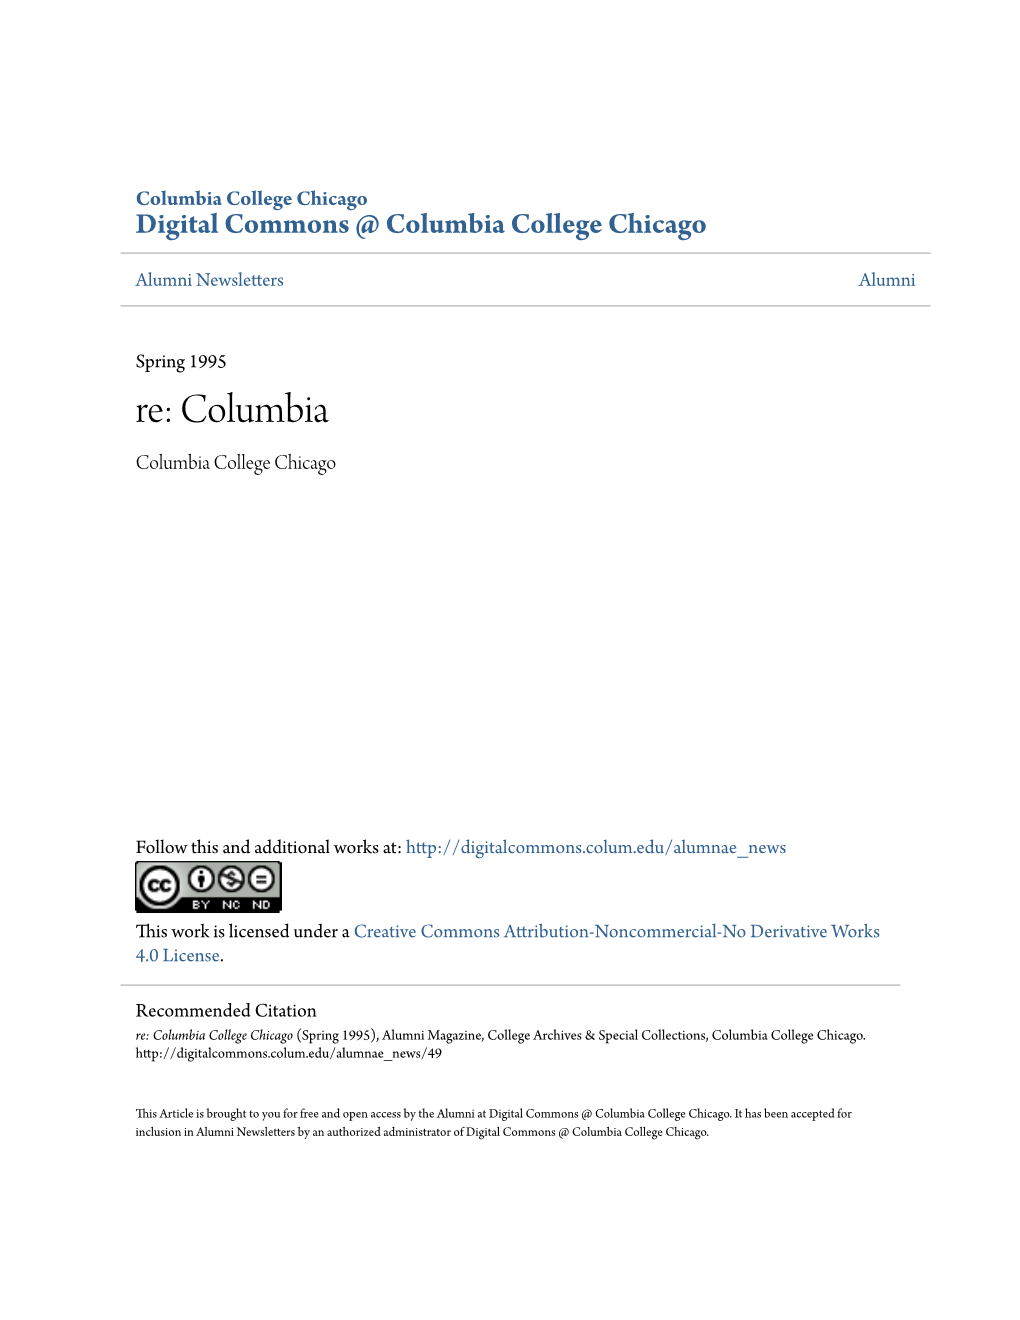 Re: Columbia Columbia College Chicago